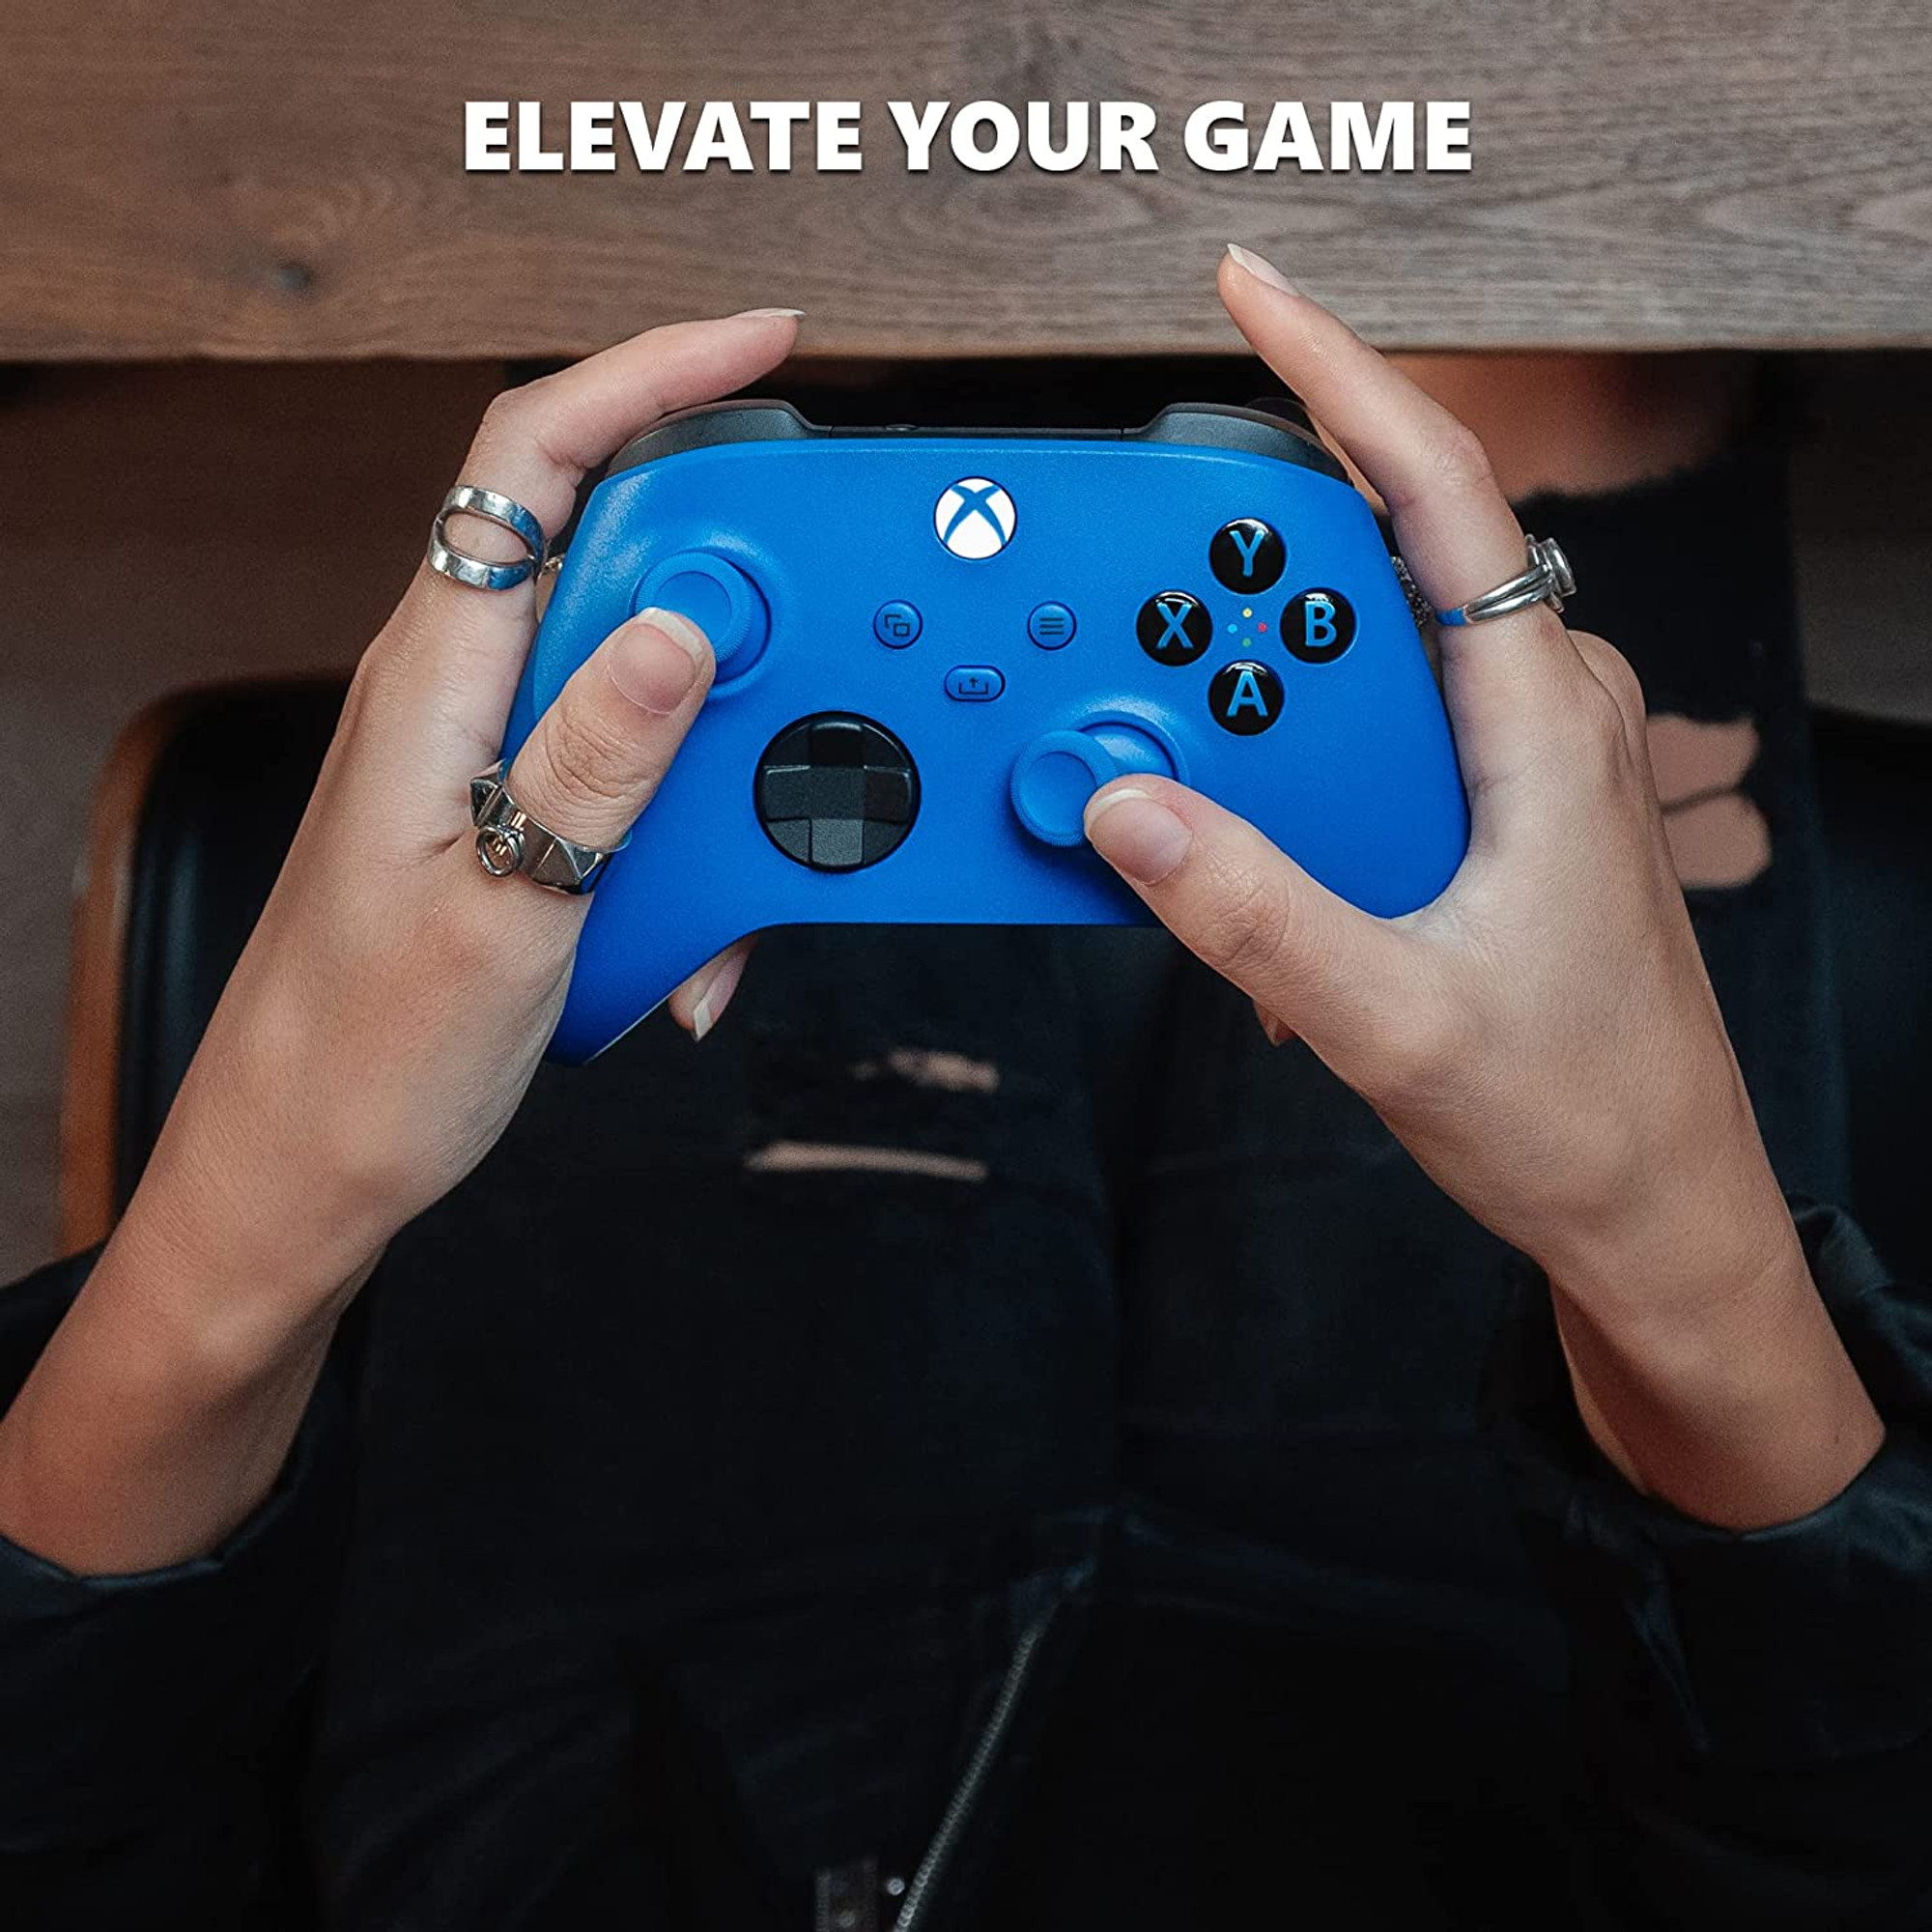 Microsoft Xbox One Wireless Controller Shock Blue